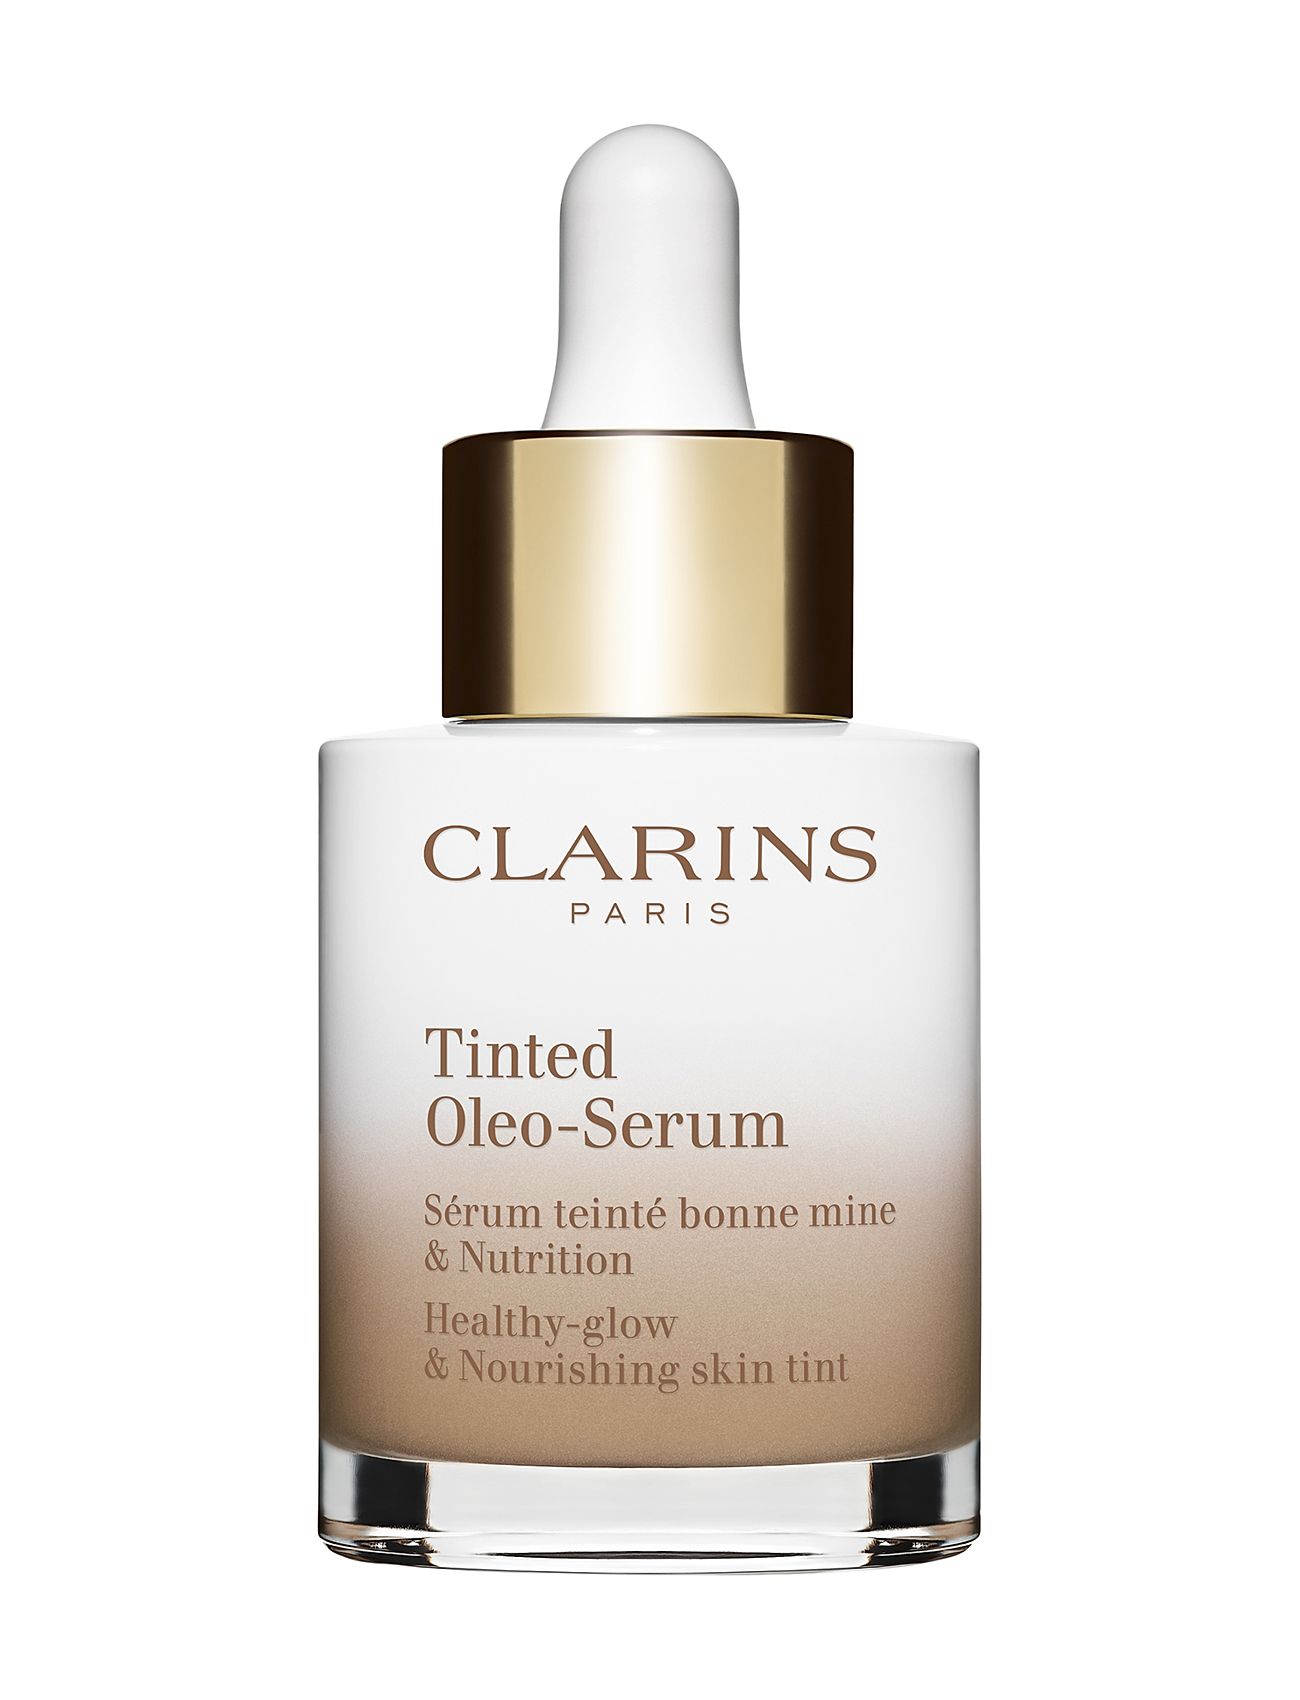 Tinted Oleo-Serum 05 Foundation Makeup Clarins